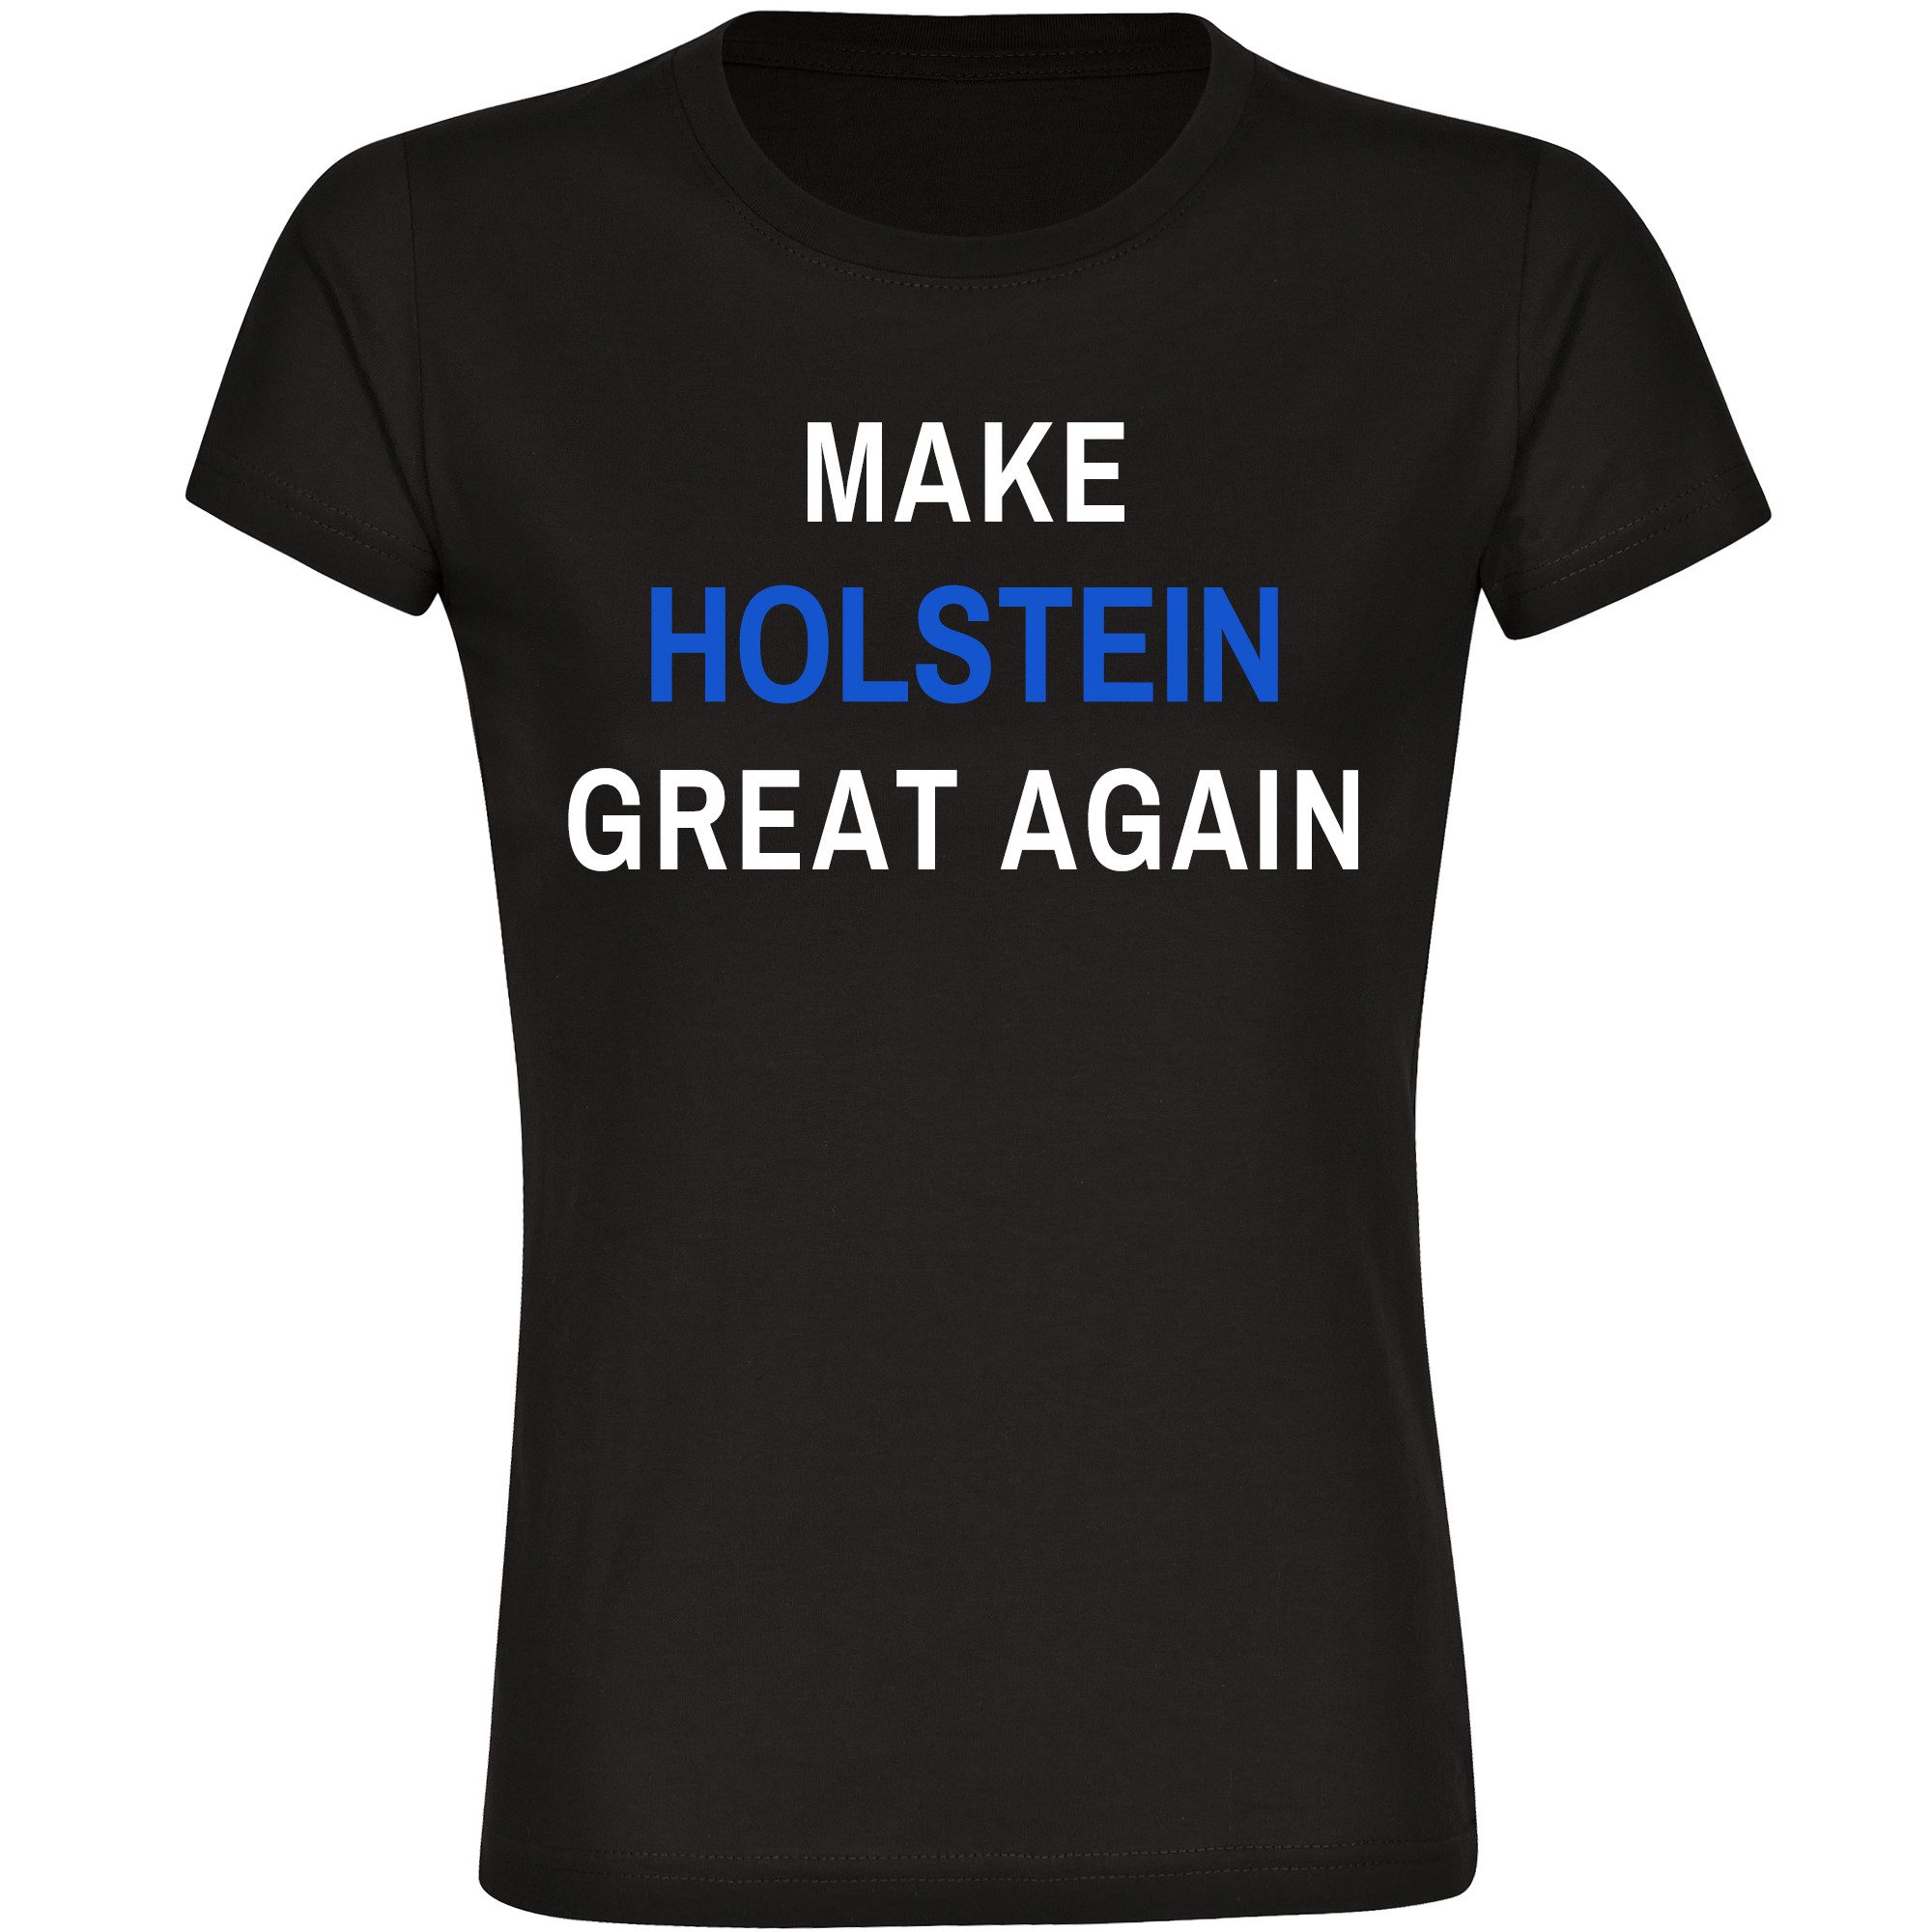 multifanshop T-Shirt Damen Holstein - Make Great Again - Frauen